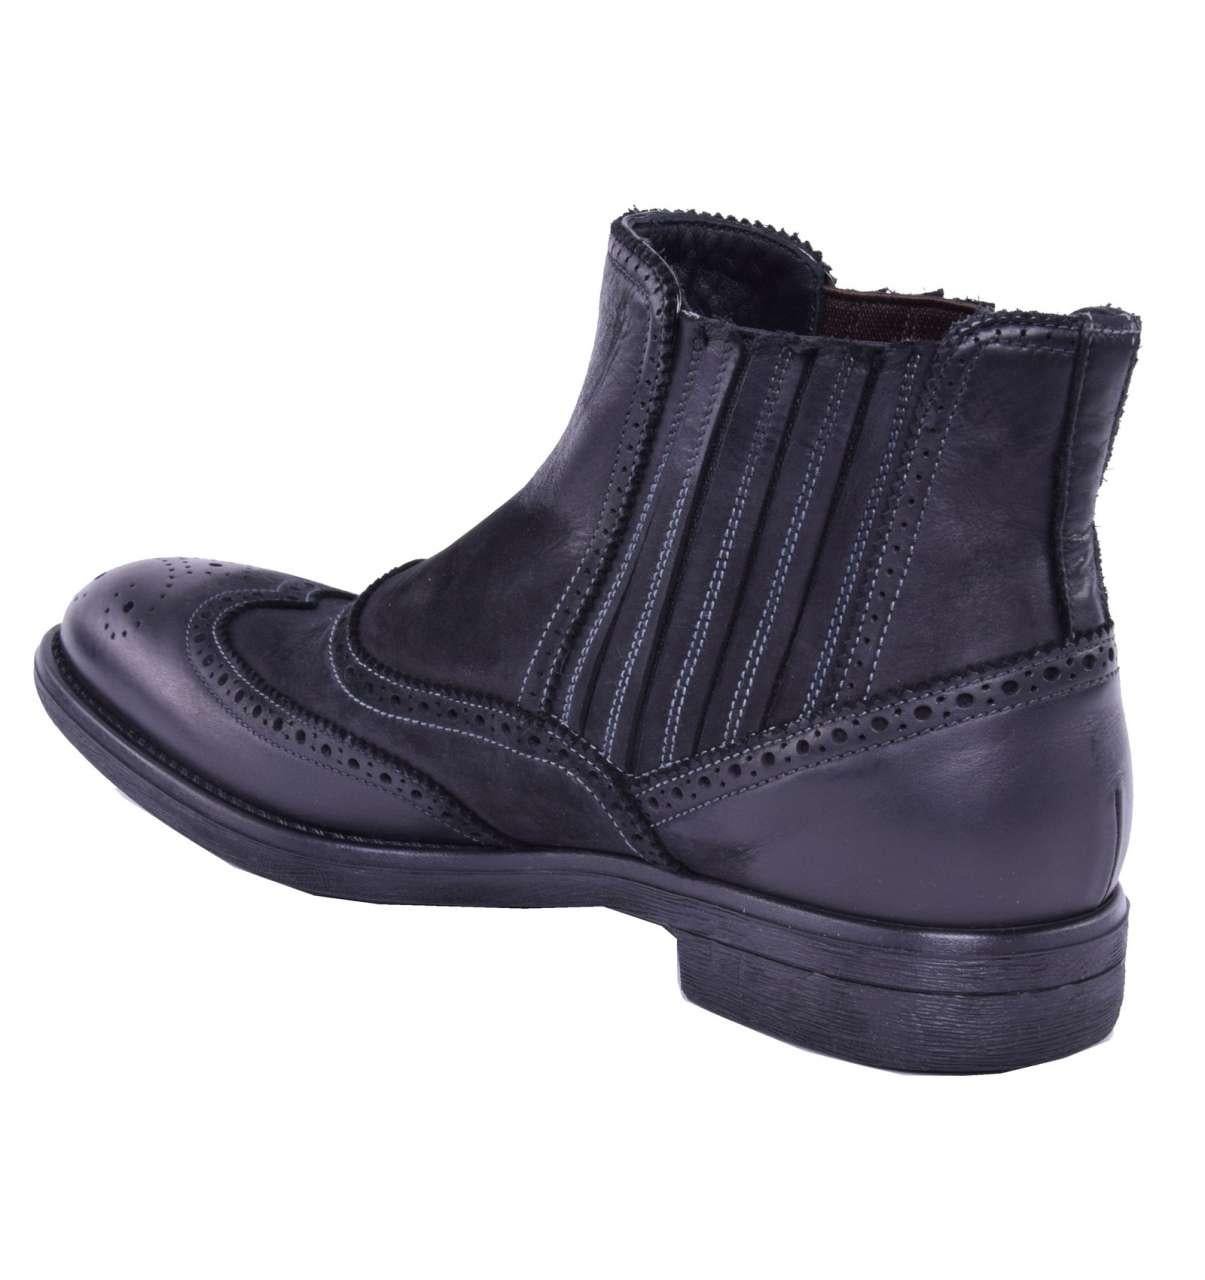 Dolce & Gabbana - Suede Boots Black In Excellent Condition For Sale In Erkrath, DE